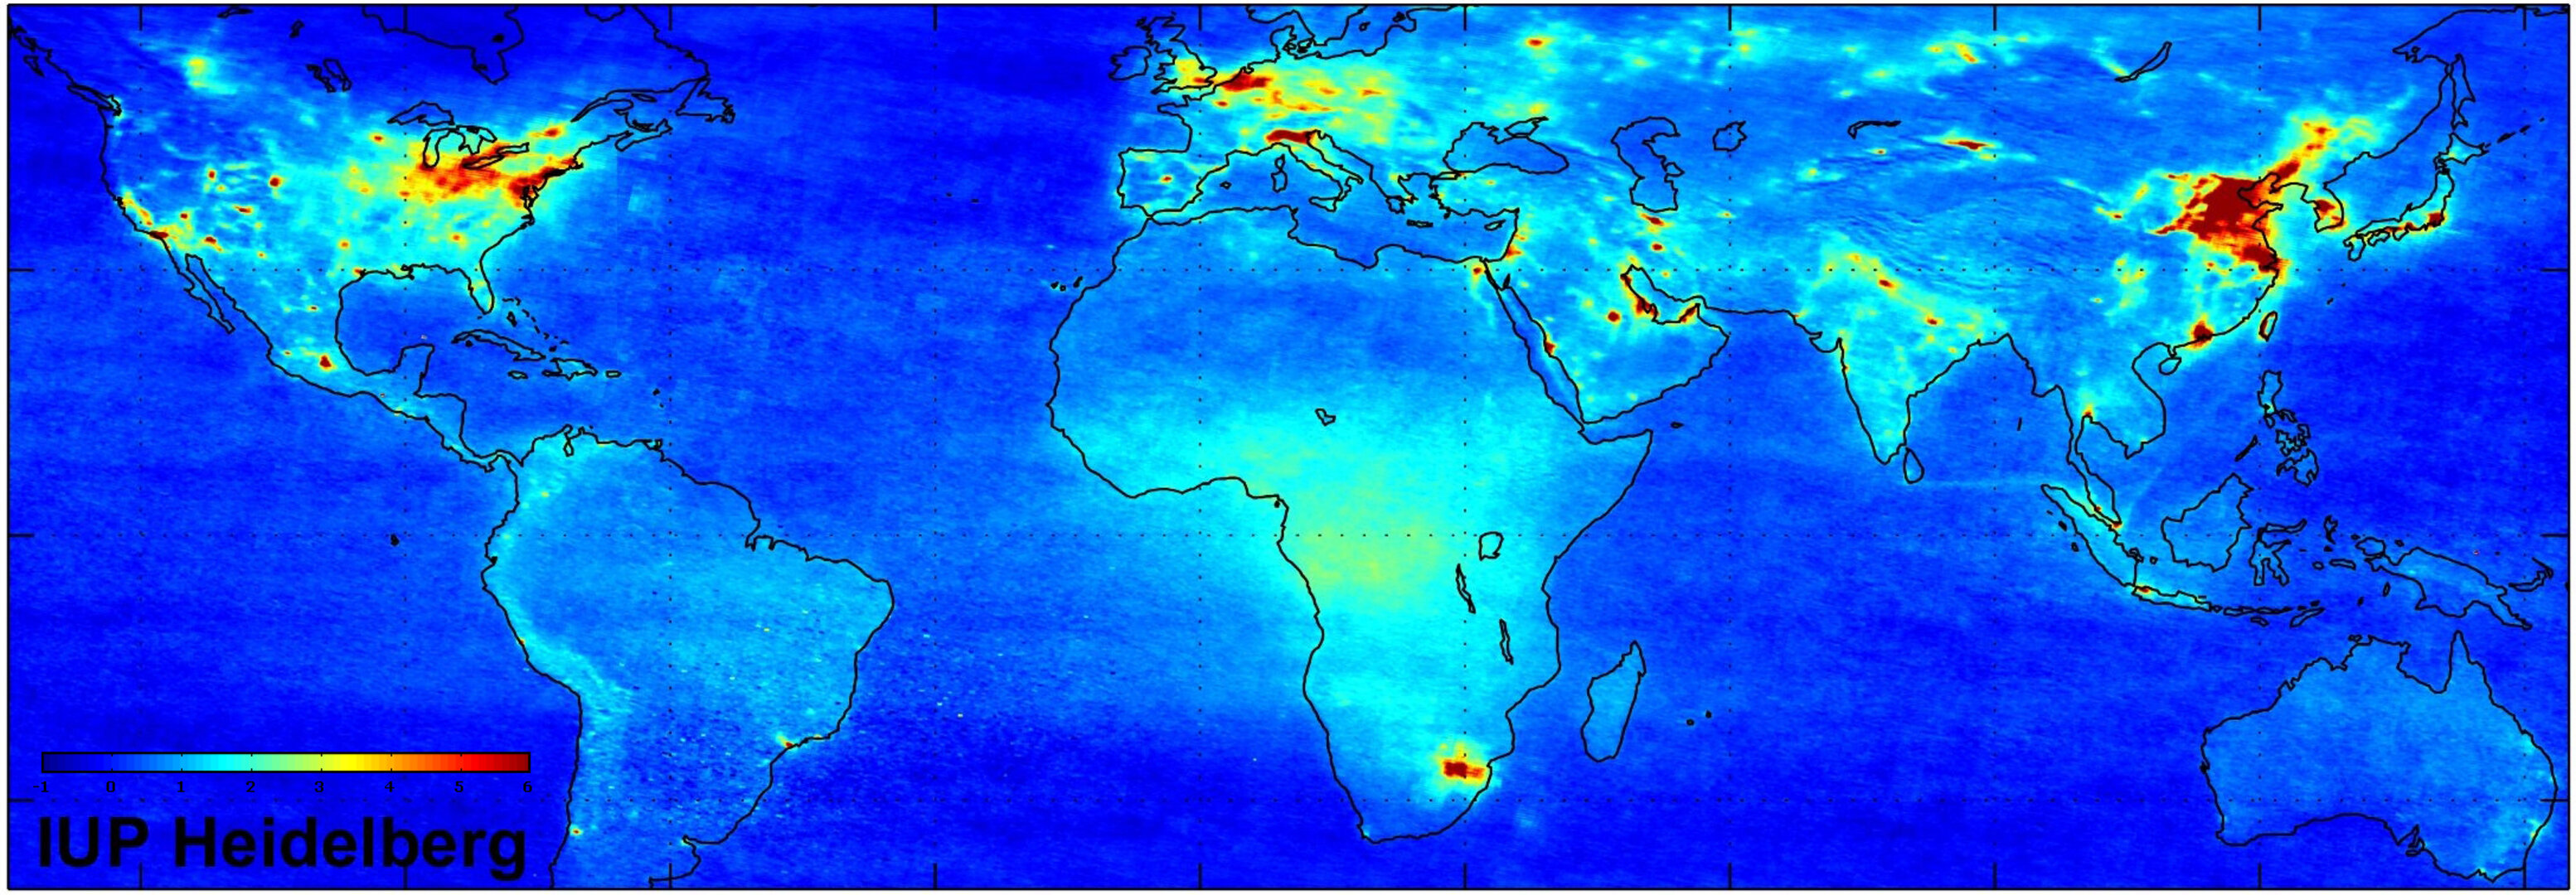 Global nitrogen dioxide pollution map realised thanks to Envisat's instruments